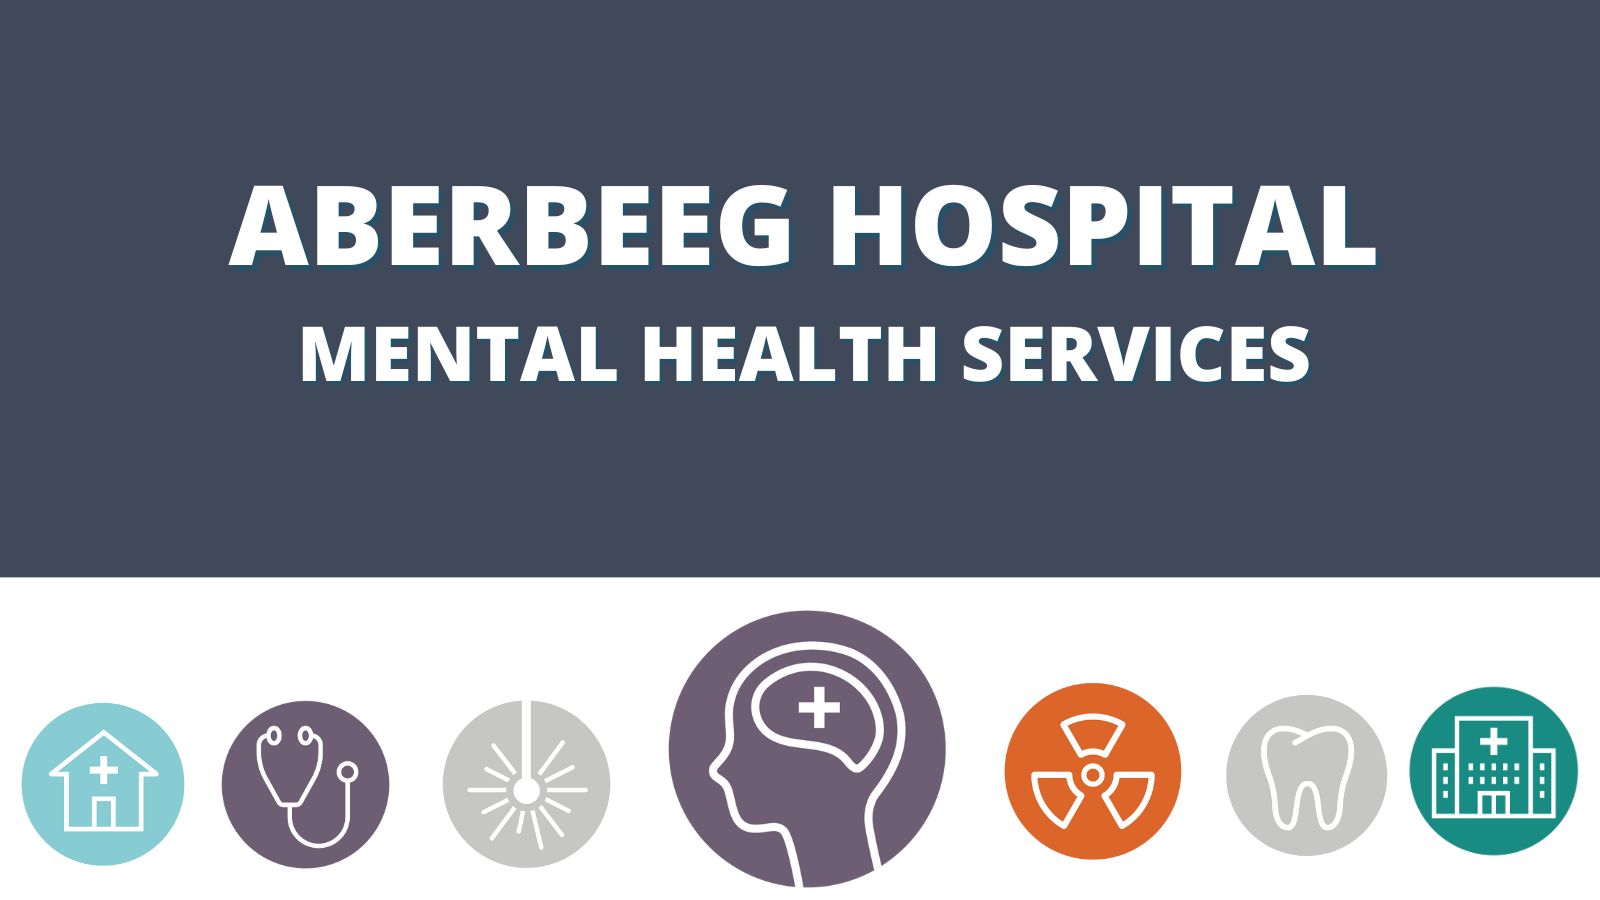 Aberbeeg Hospital Mental Health Services